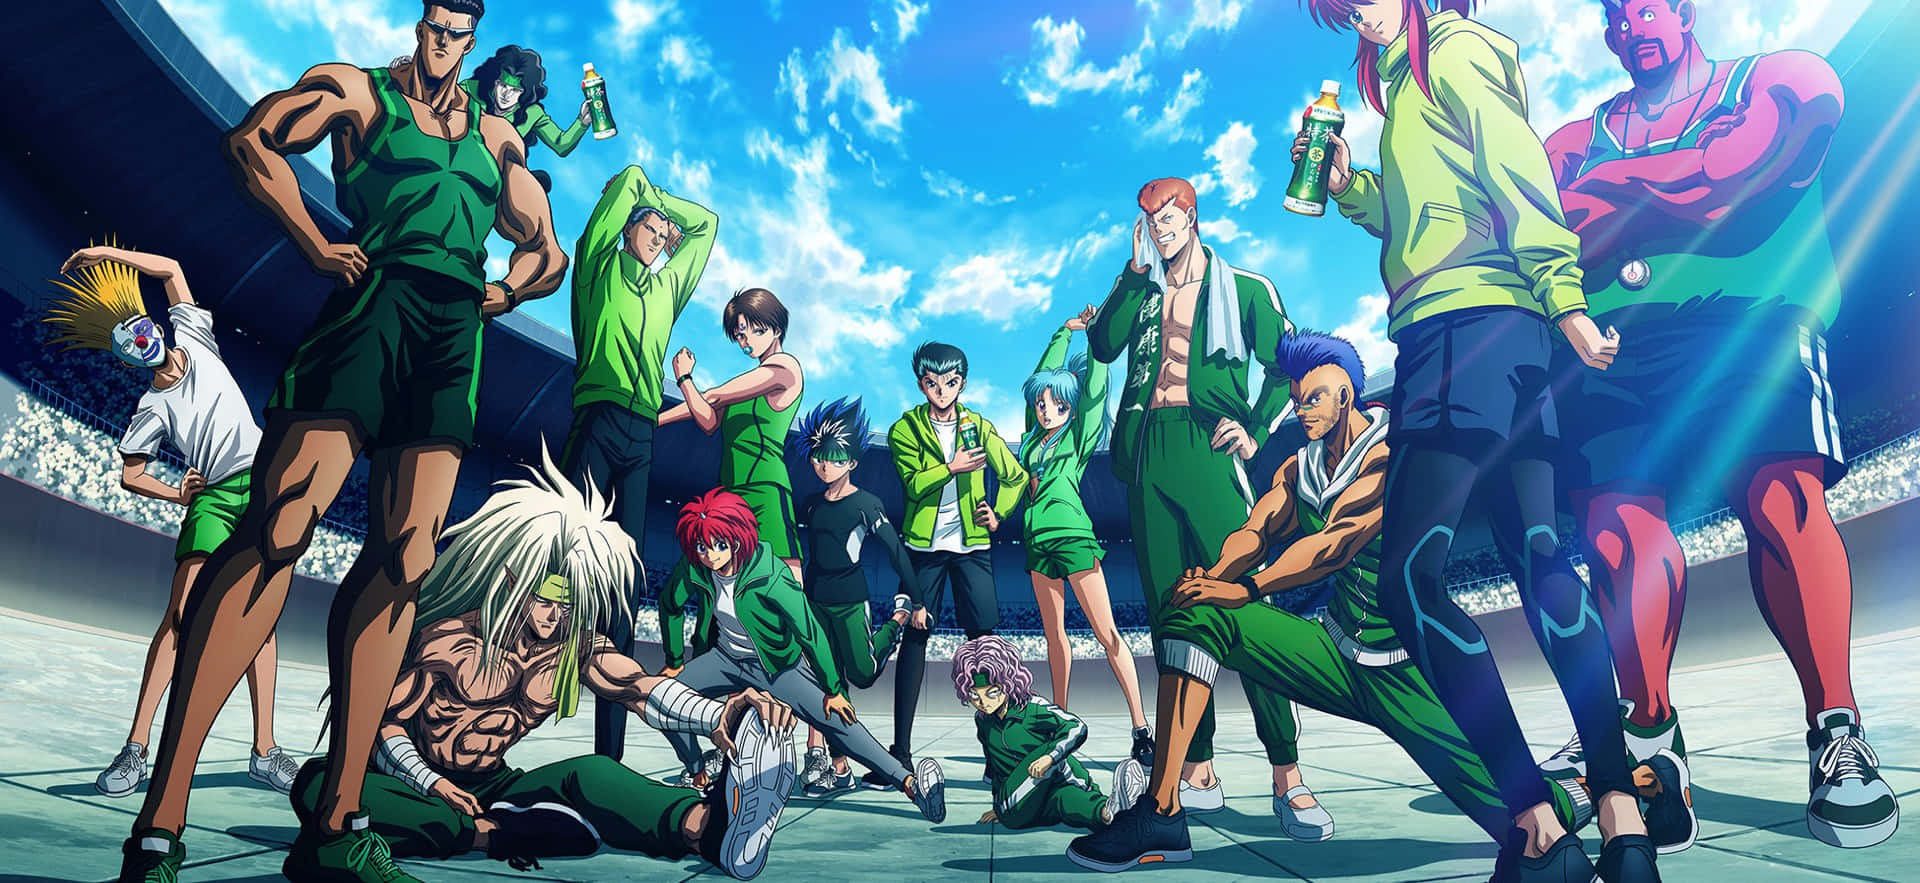 Anime Sports Team Pose Wallpaper